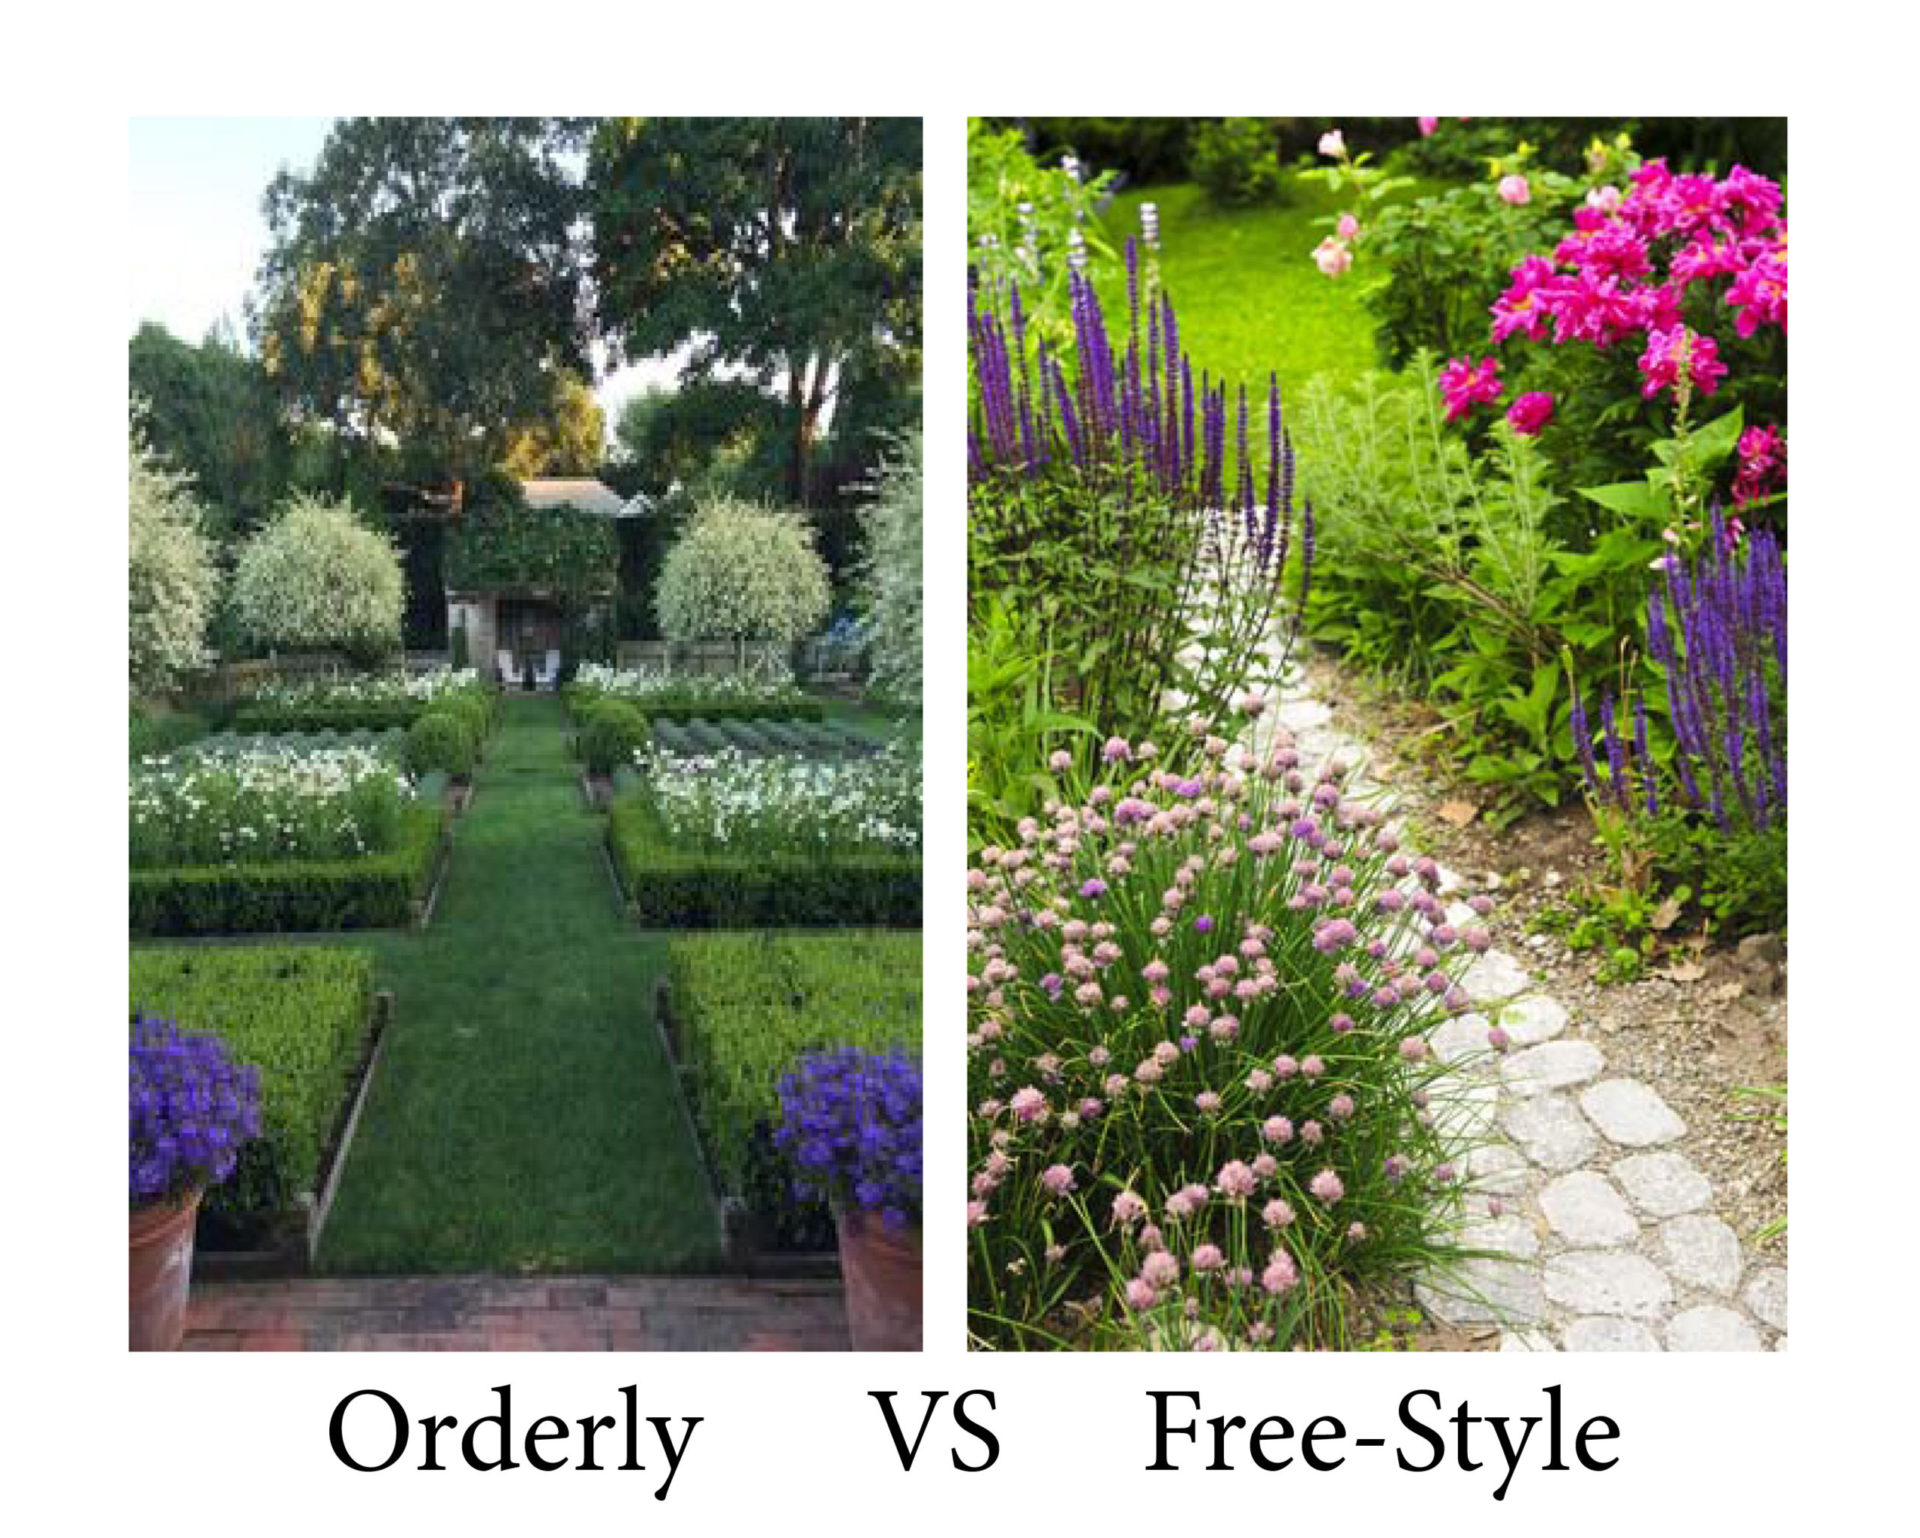 garden style - orderly vs free-style plants 